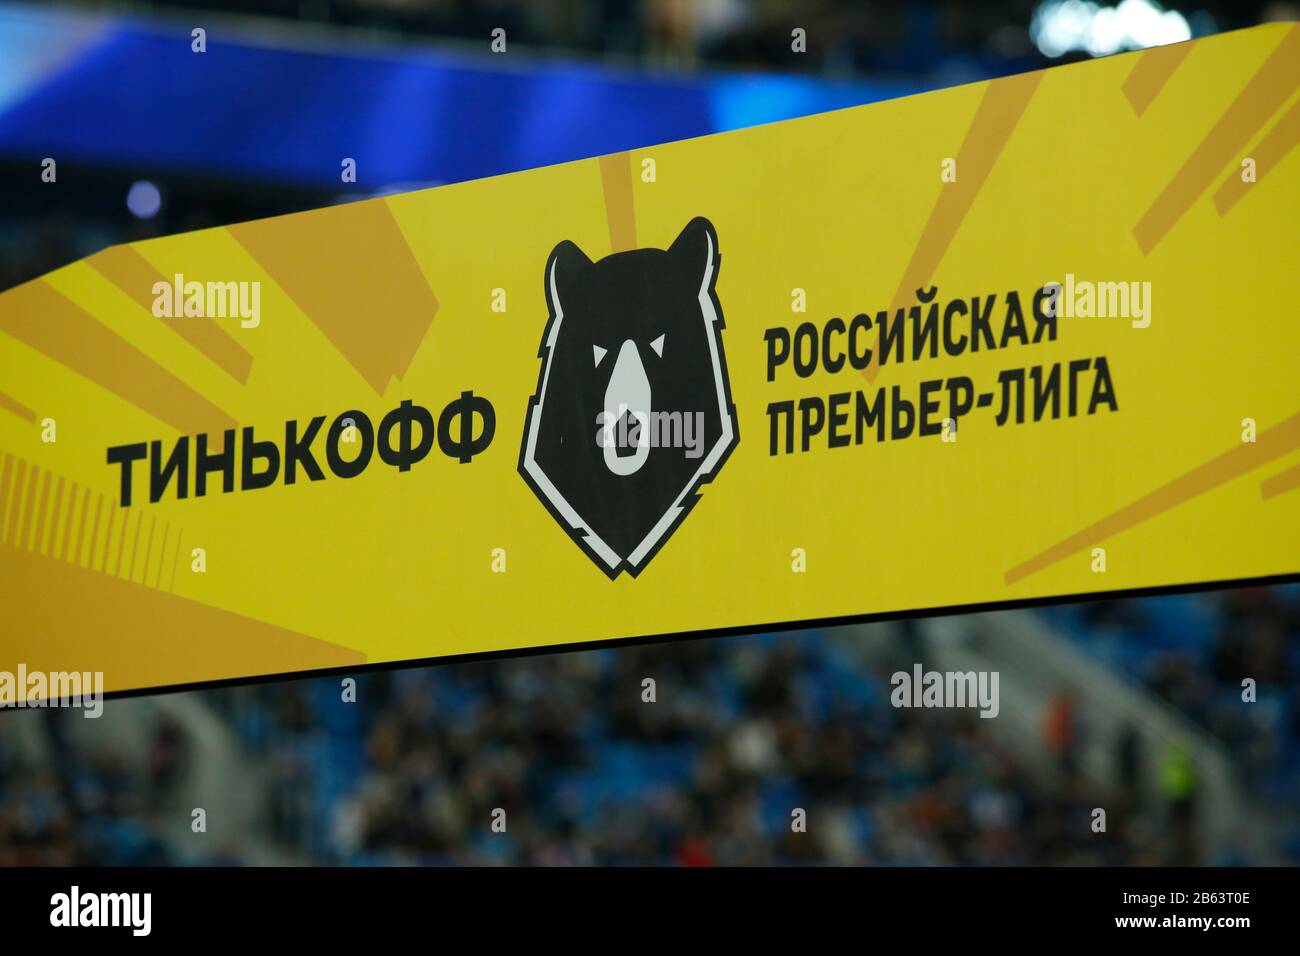 A view of a Russian Premier-League logo during the Russian football Premier League match between Zenit St. Petersburg and FC Ufa. (Final score; Zenit St. Petersburg 0:0 FC Ufa) Stock Photo